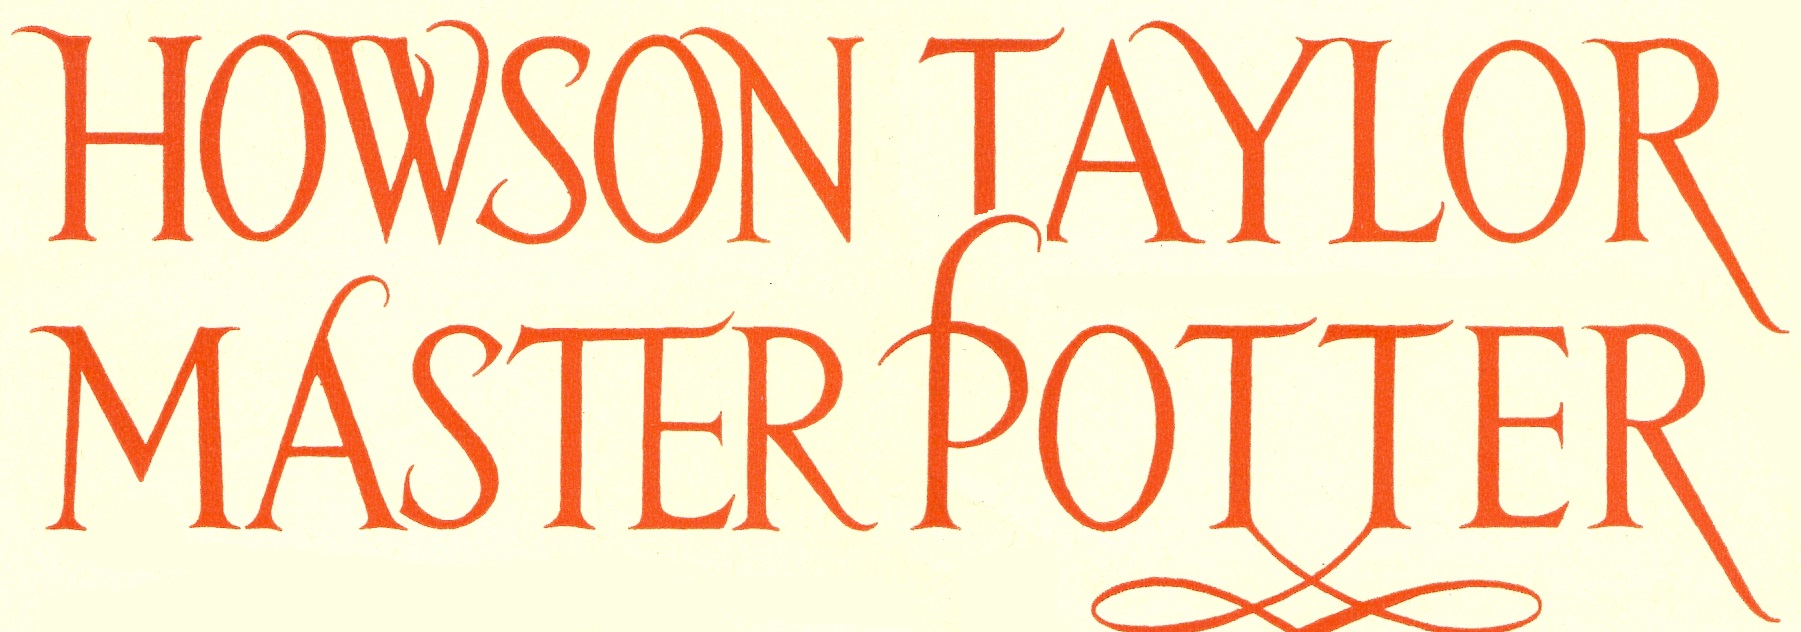 Howson Taylor Master Potter